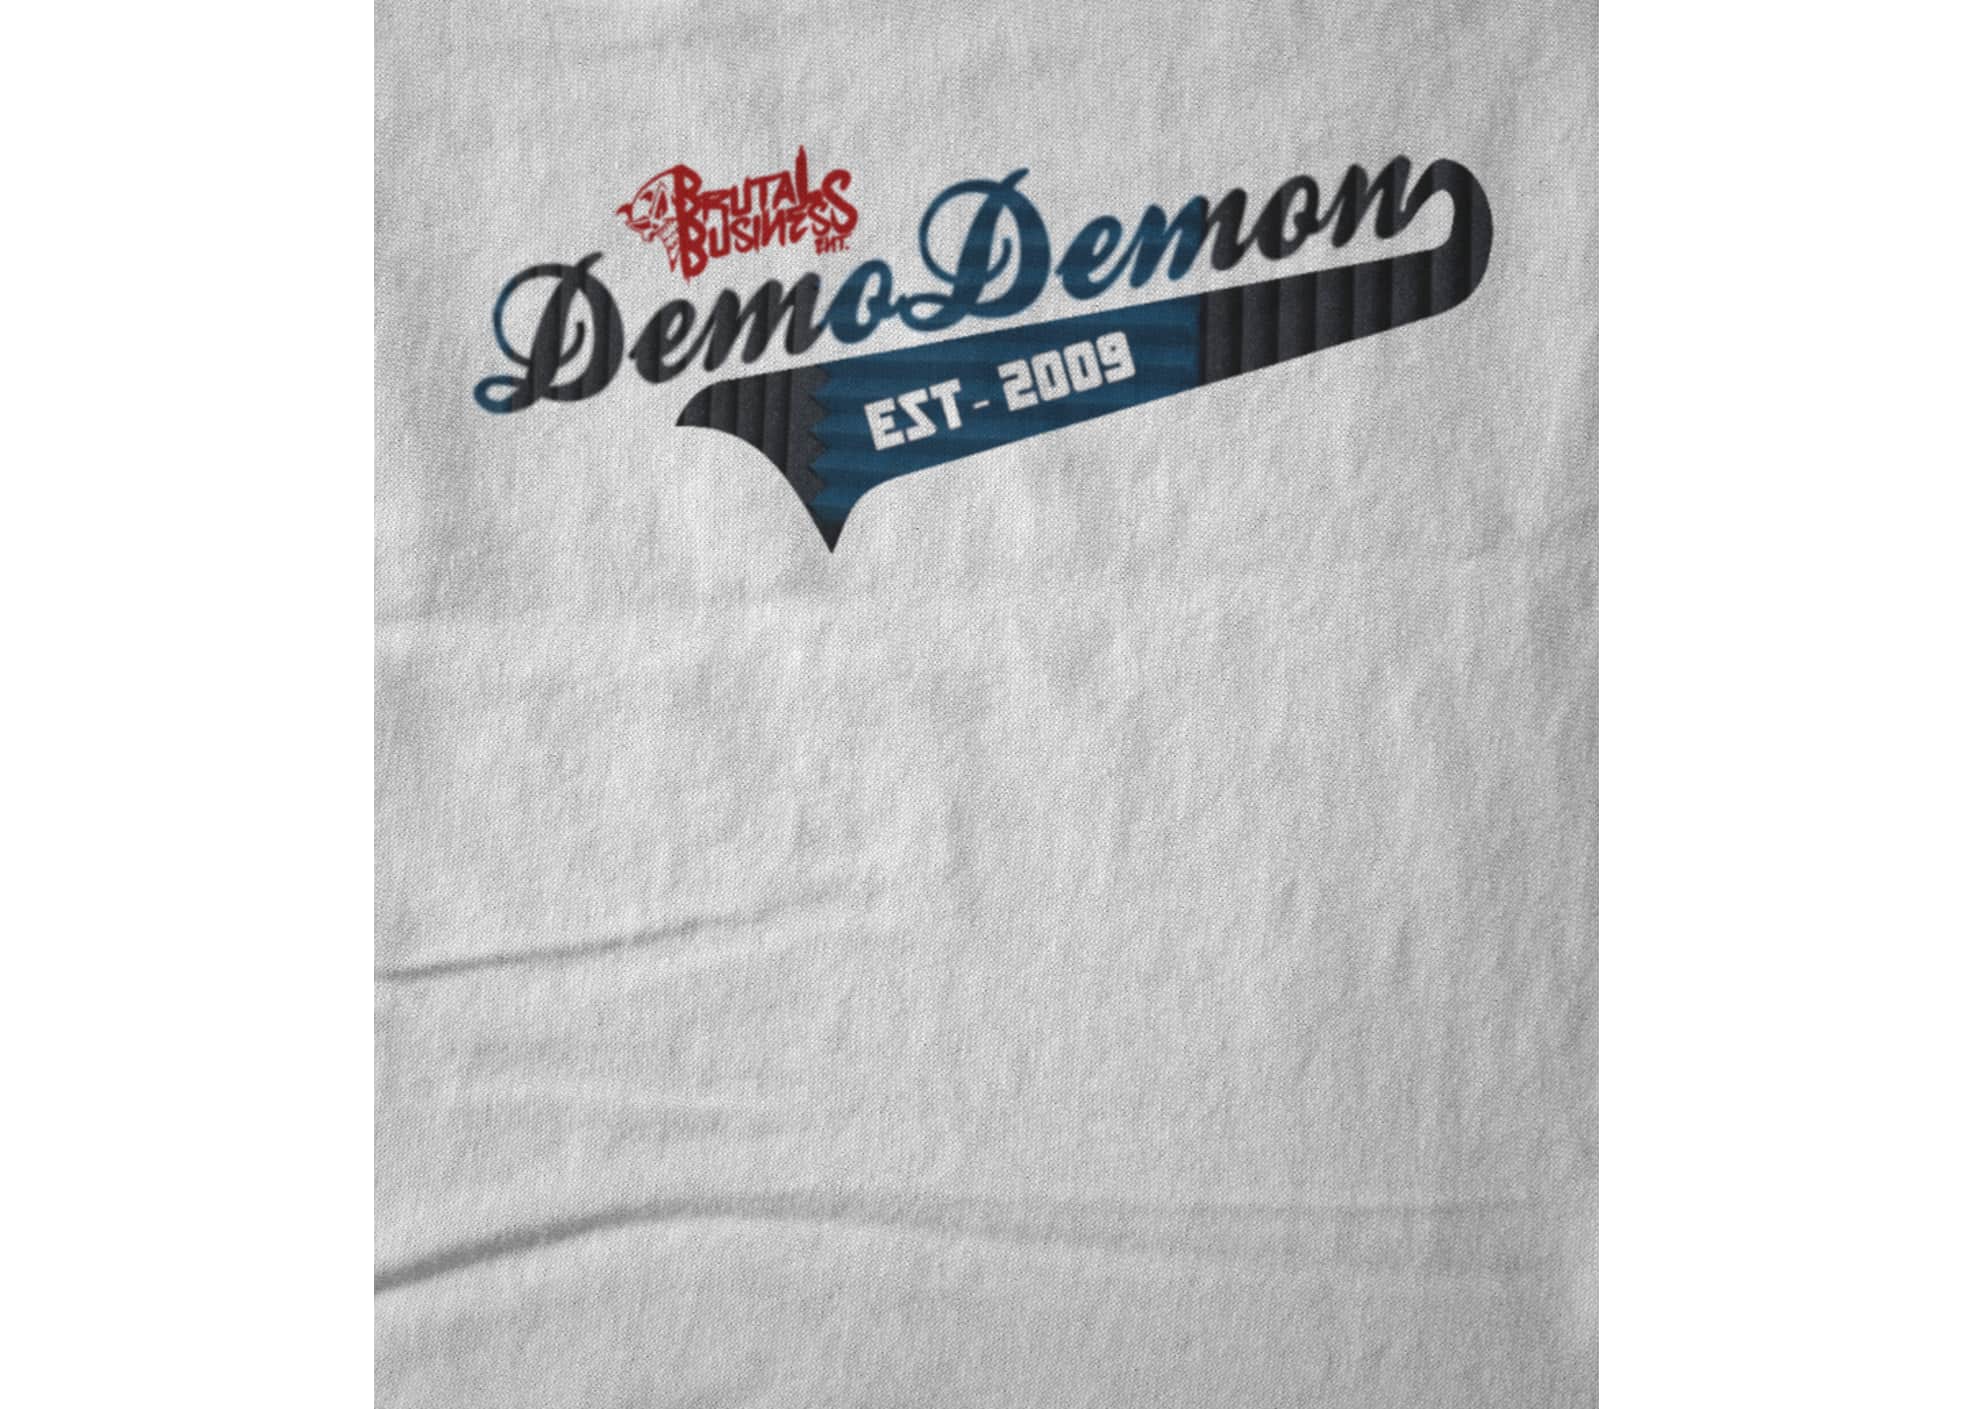 Demo demon est   2009 1596495000